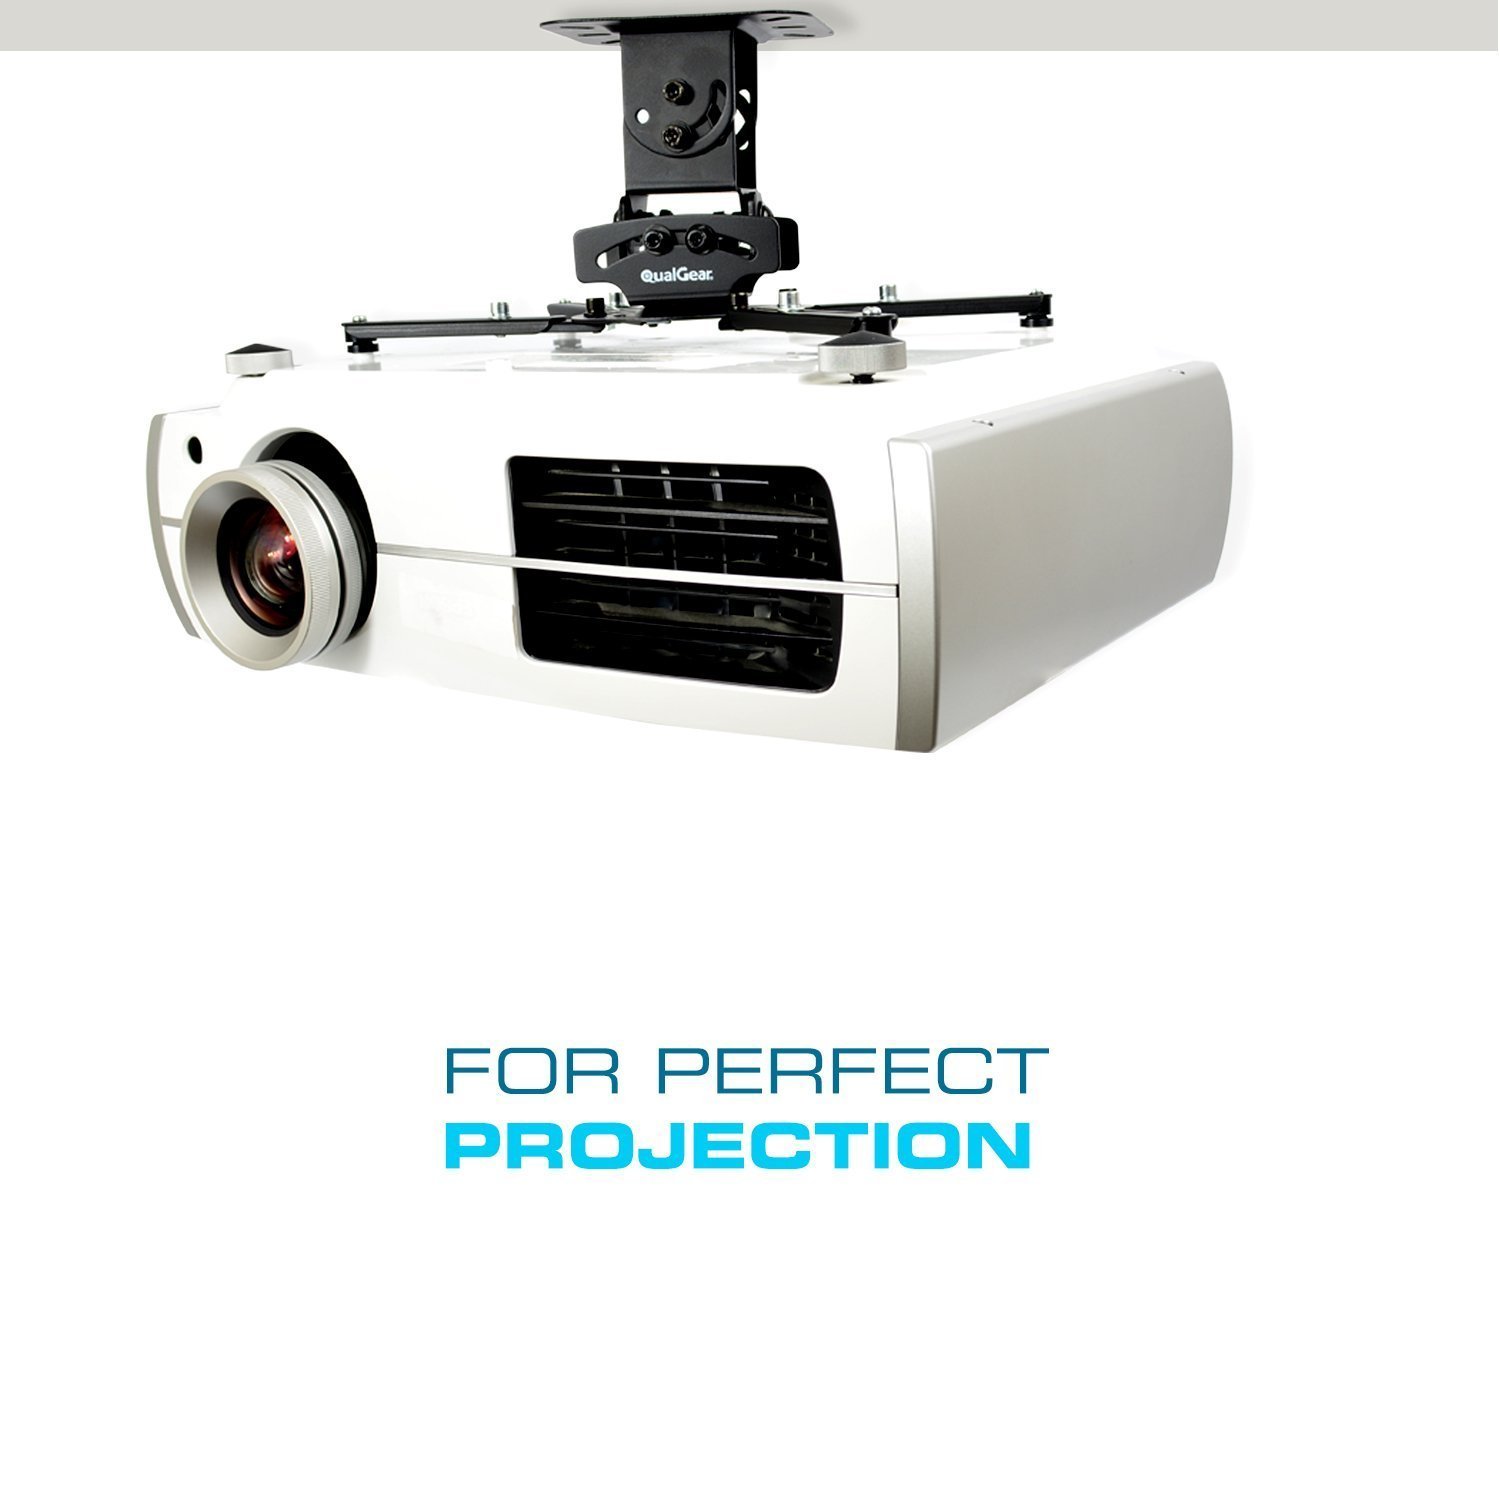 QualGear PRB-717-BLK Universal Ceiling Mount Projector Accessory